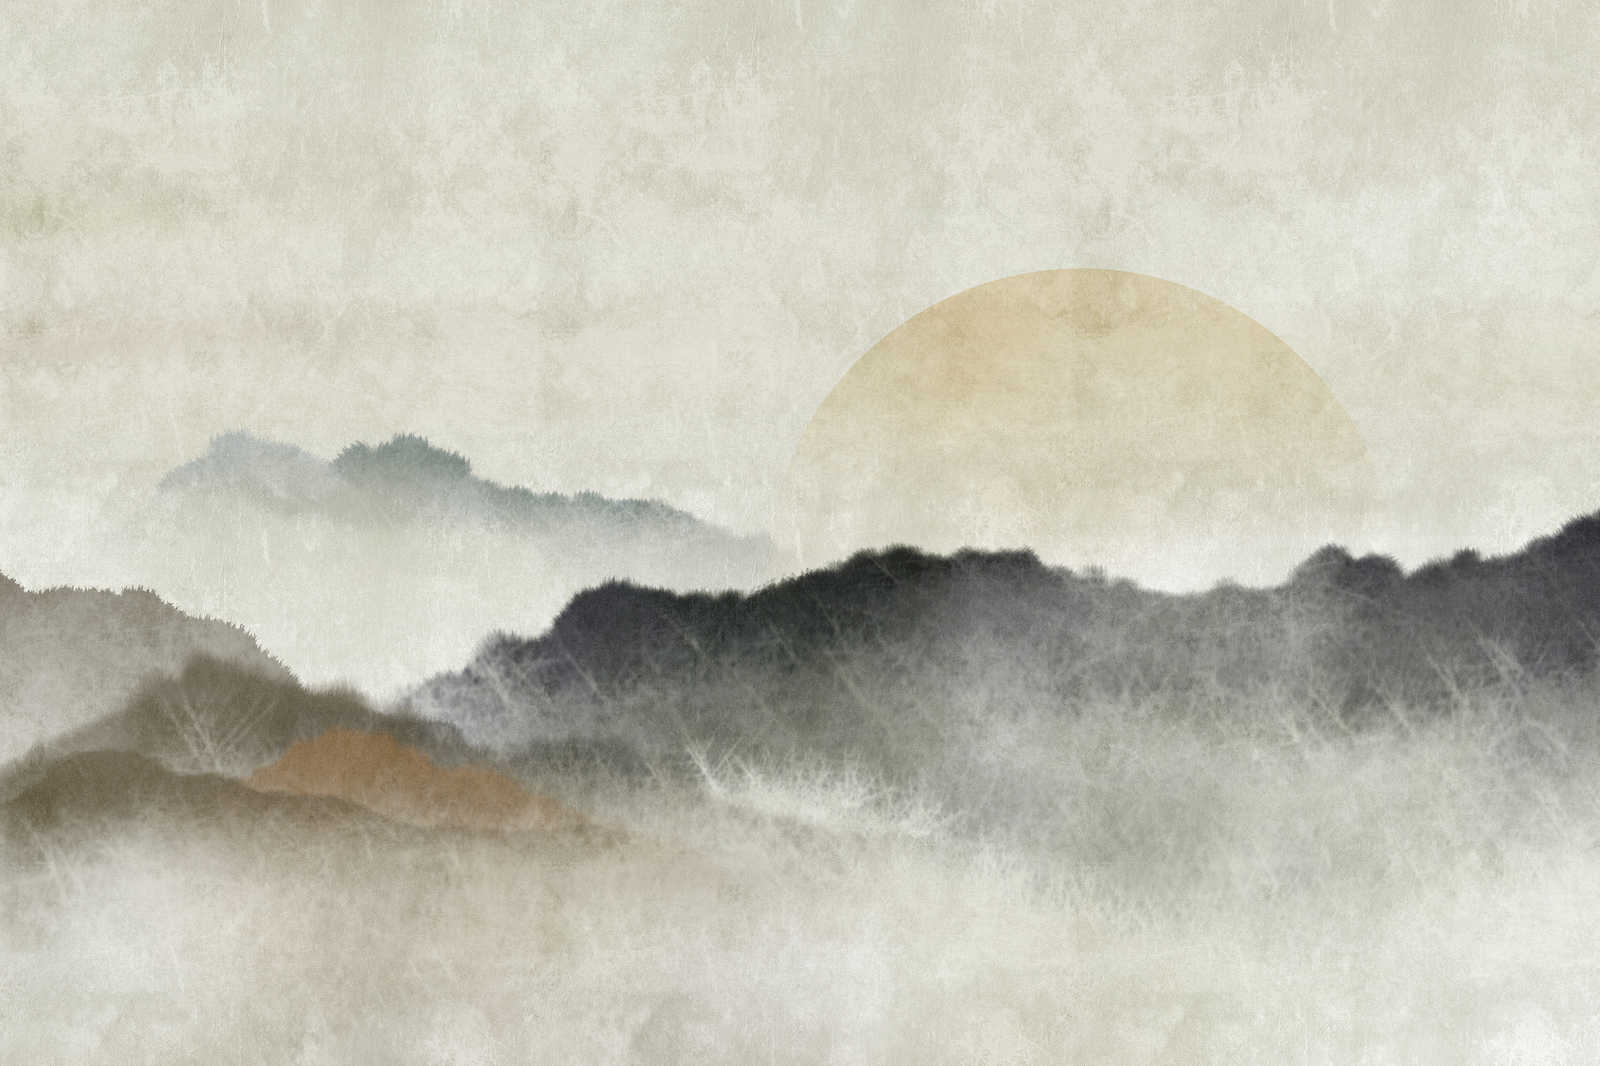             Akaishi 1 - Canvas schilderij Asian Print Bergketen in dageraad - 1.20 m x 0.80 m
        